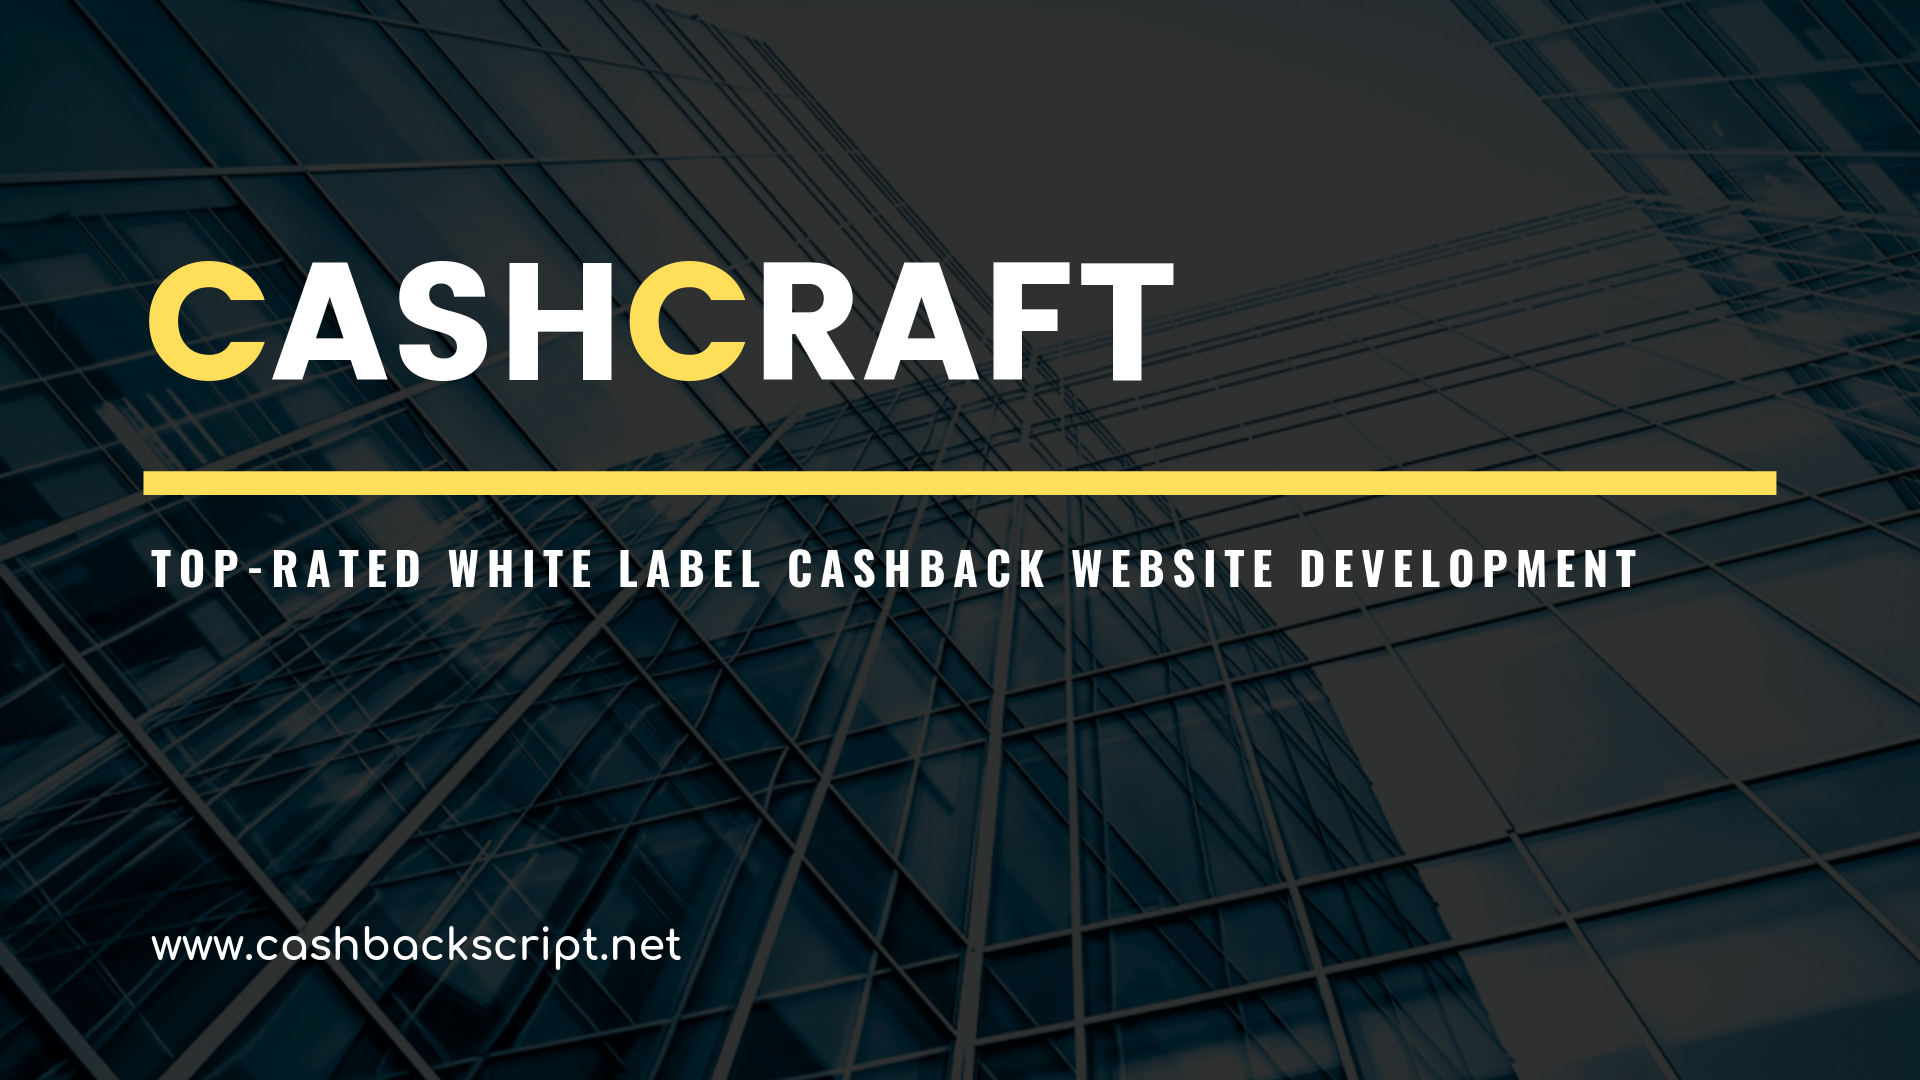 White Label Cashback Website Development Company